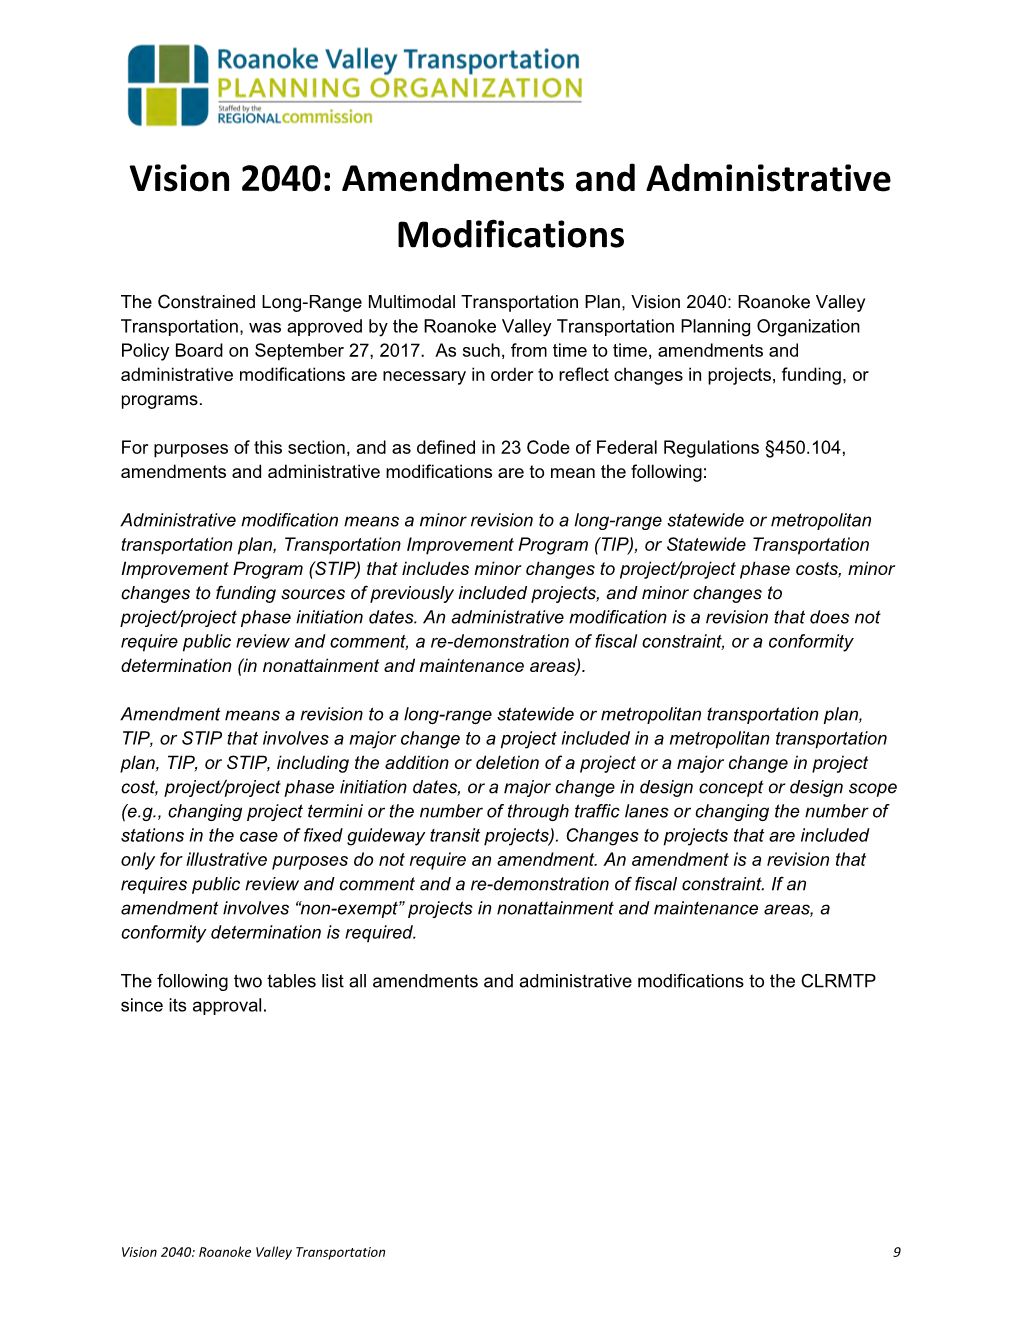 Vision 2040: Amendments and Administrative Modifications